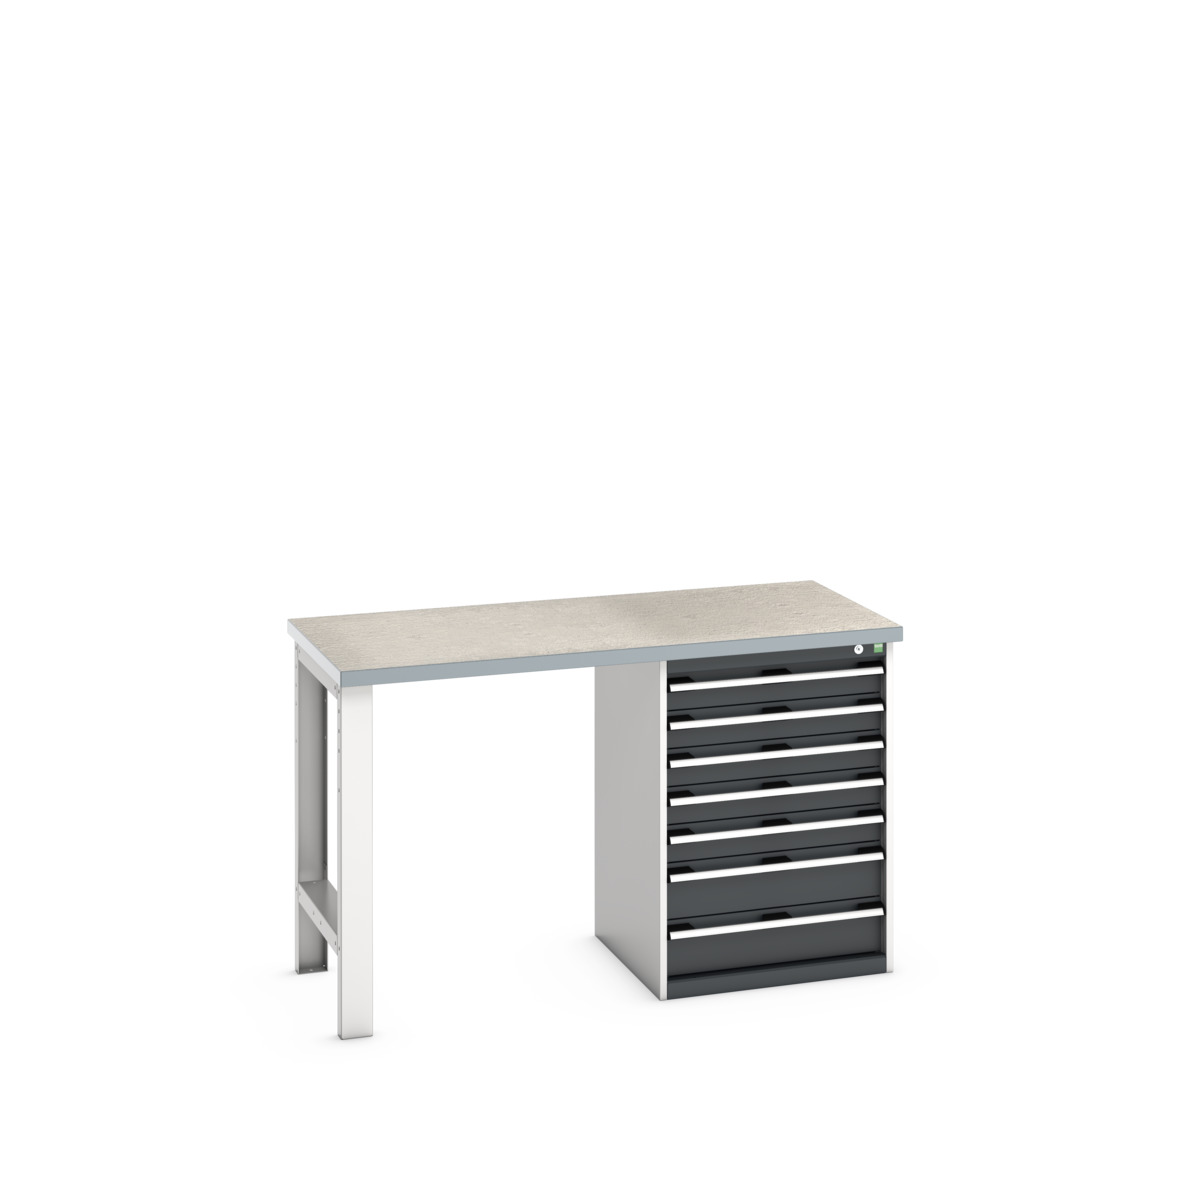 41003497. - cubio pedestal bench (lino)